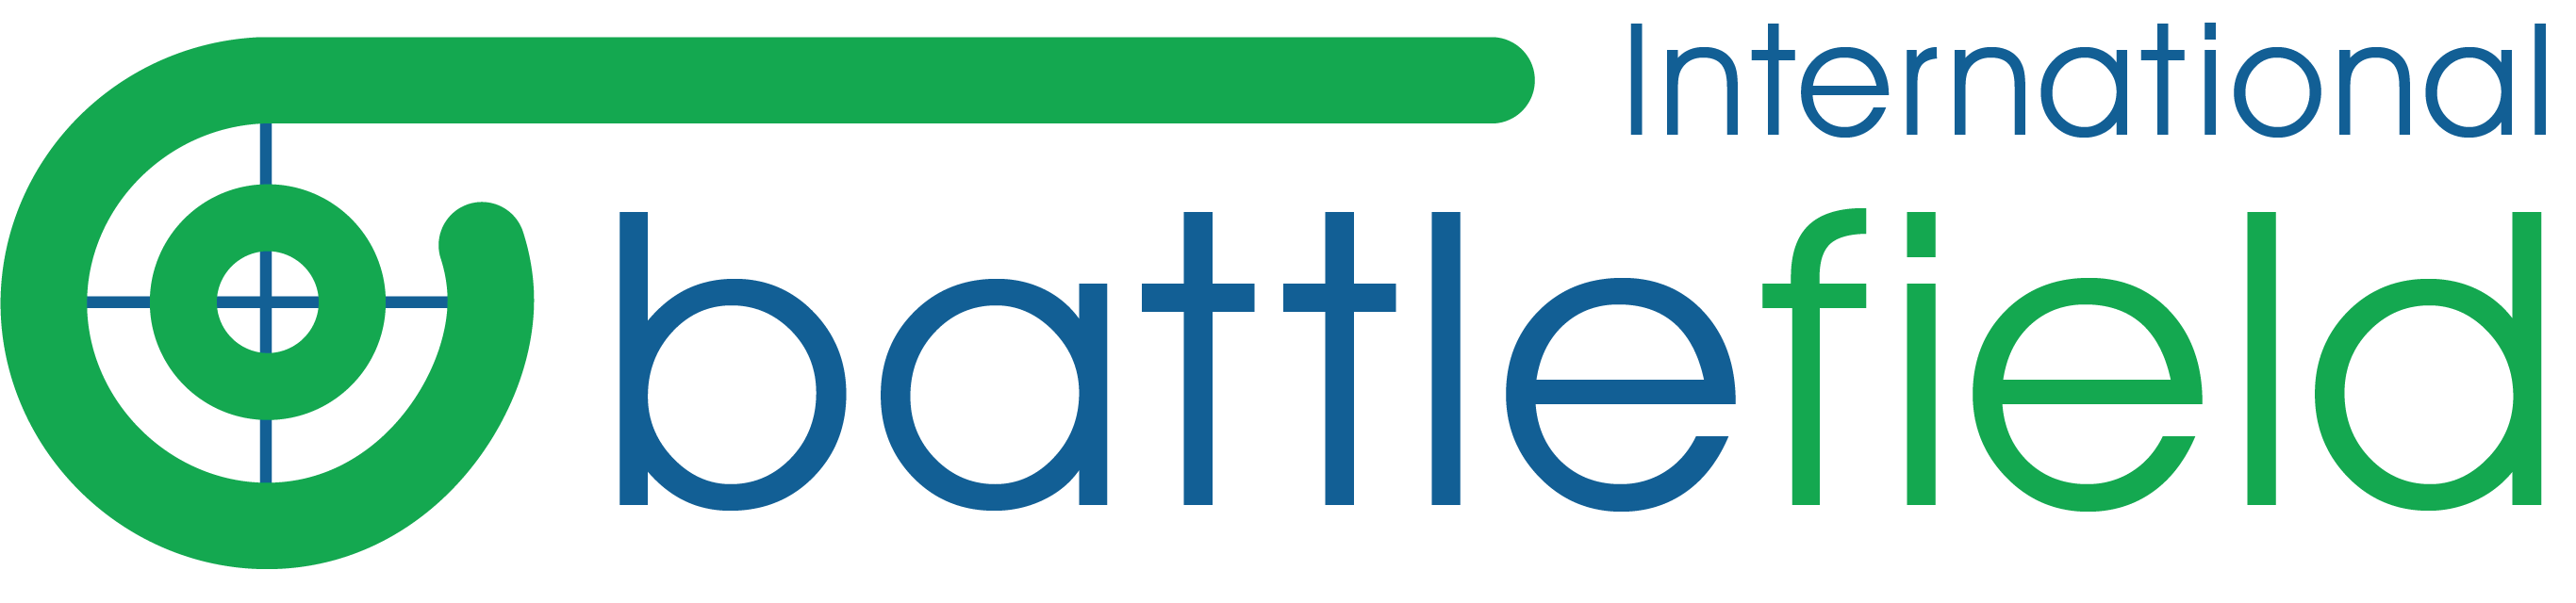 Battlefield International